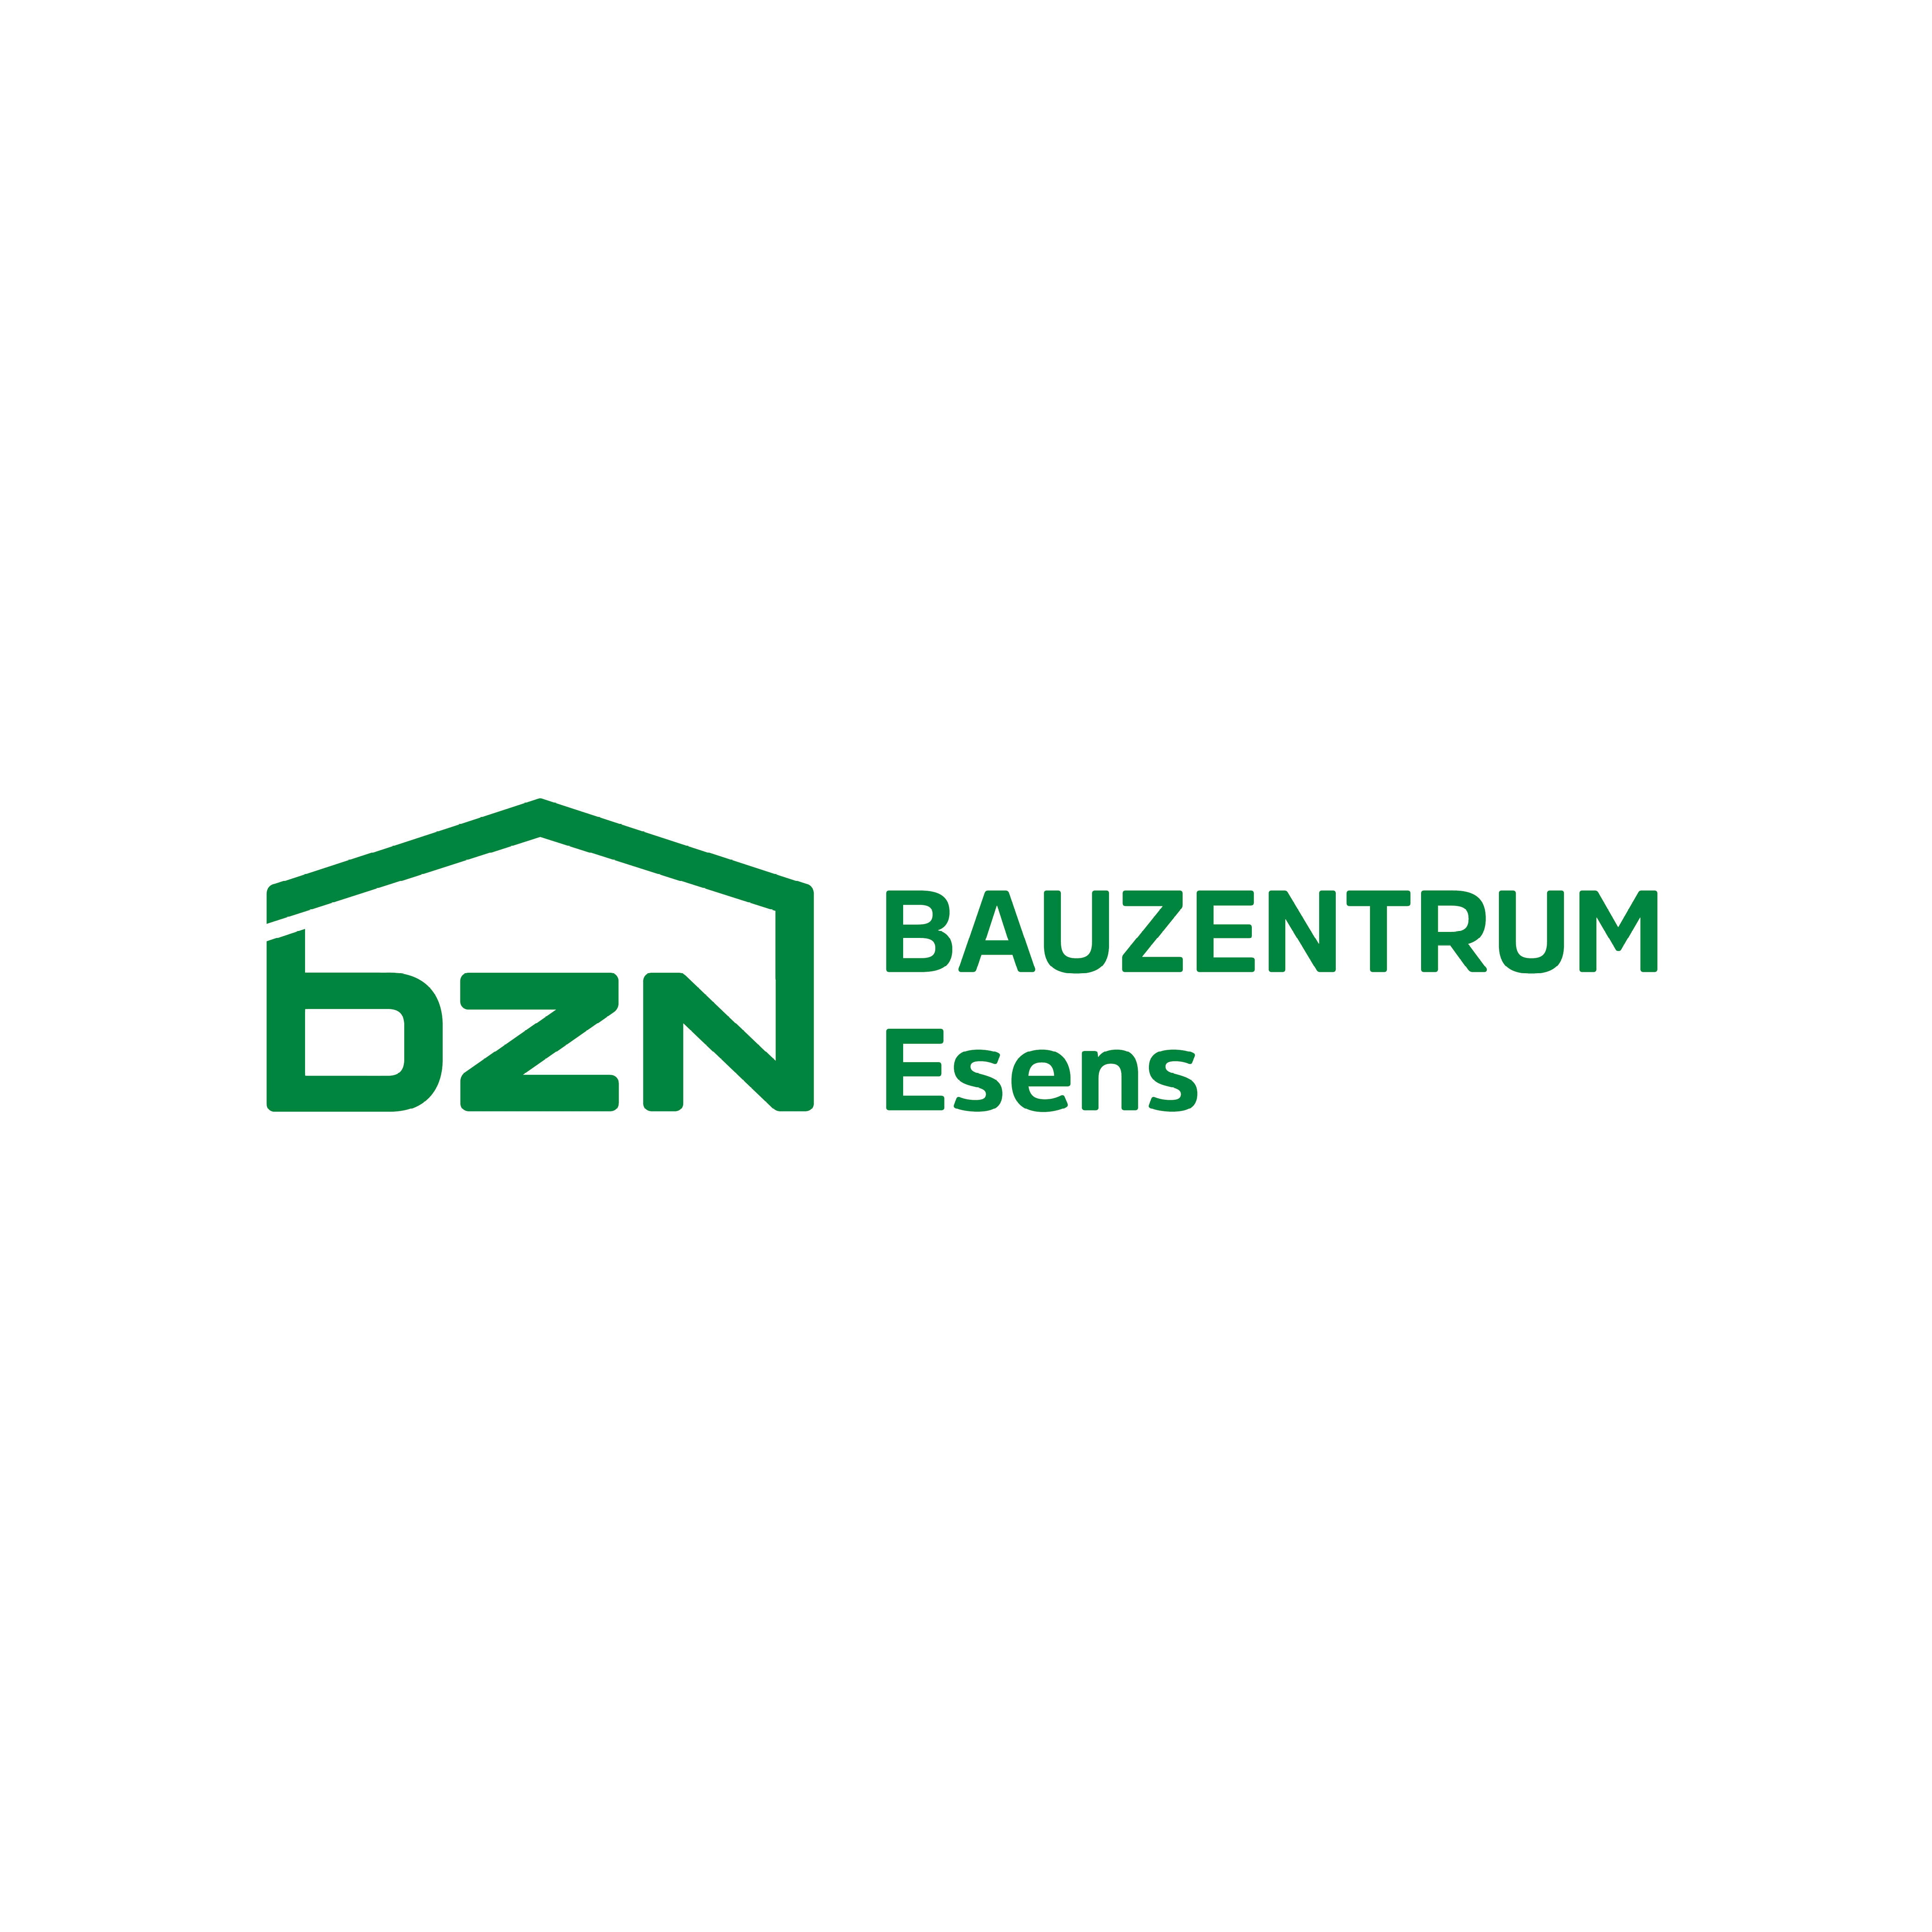 Logo BZN Bauzentrum Esens GmbH & Co. KG